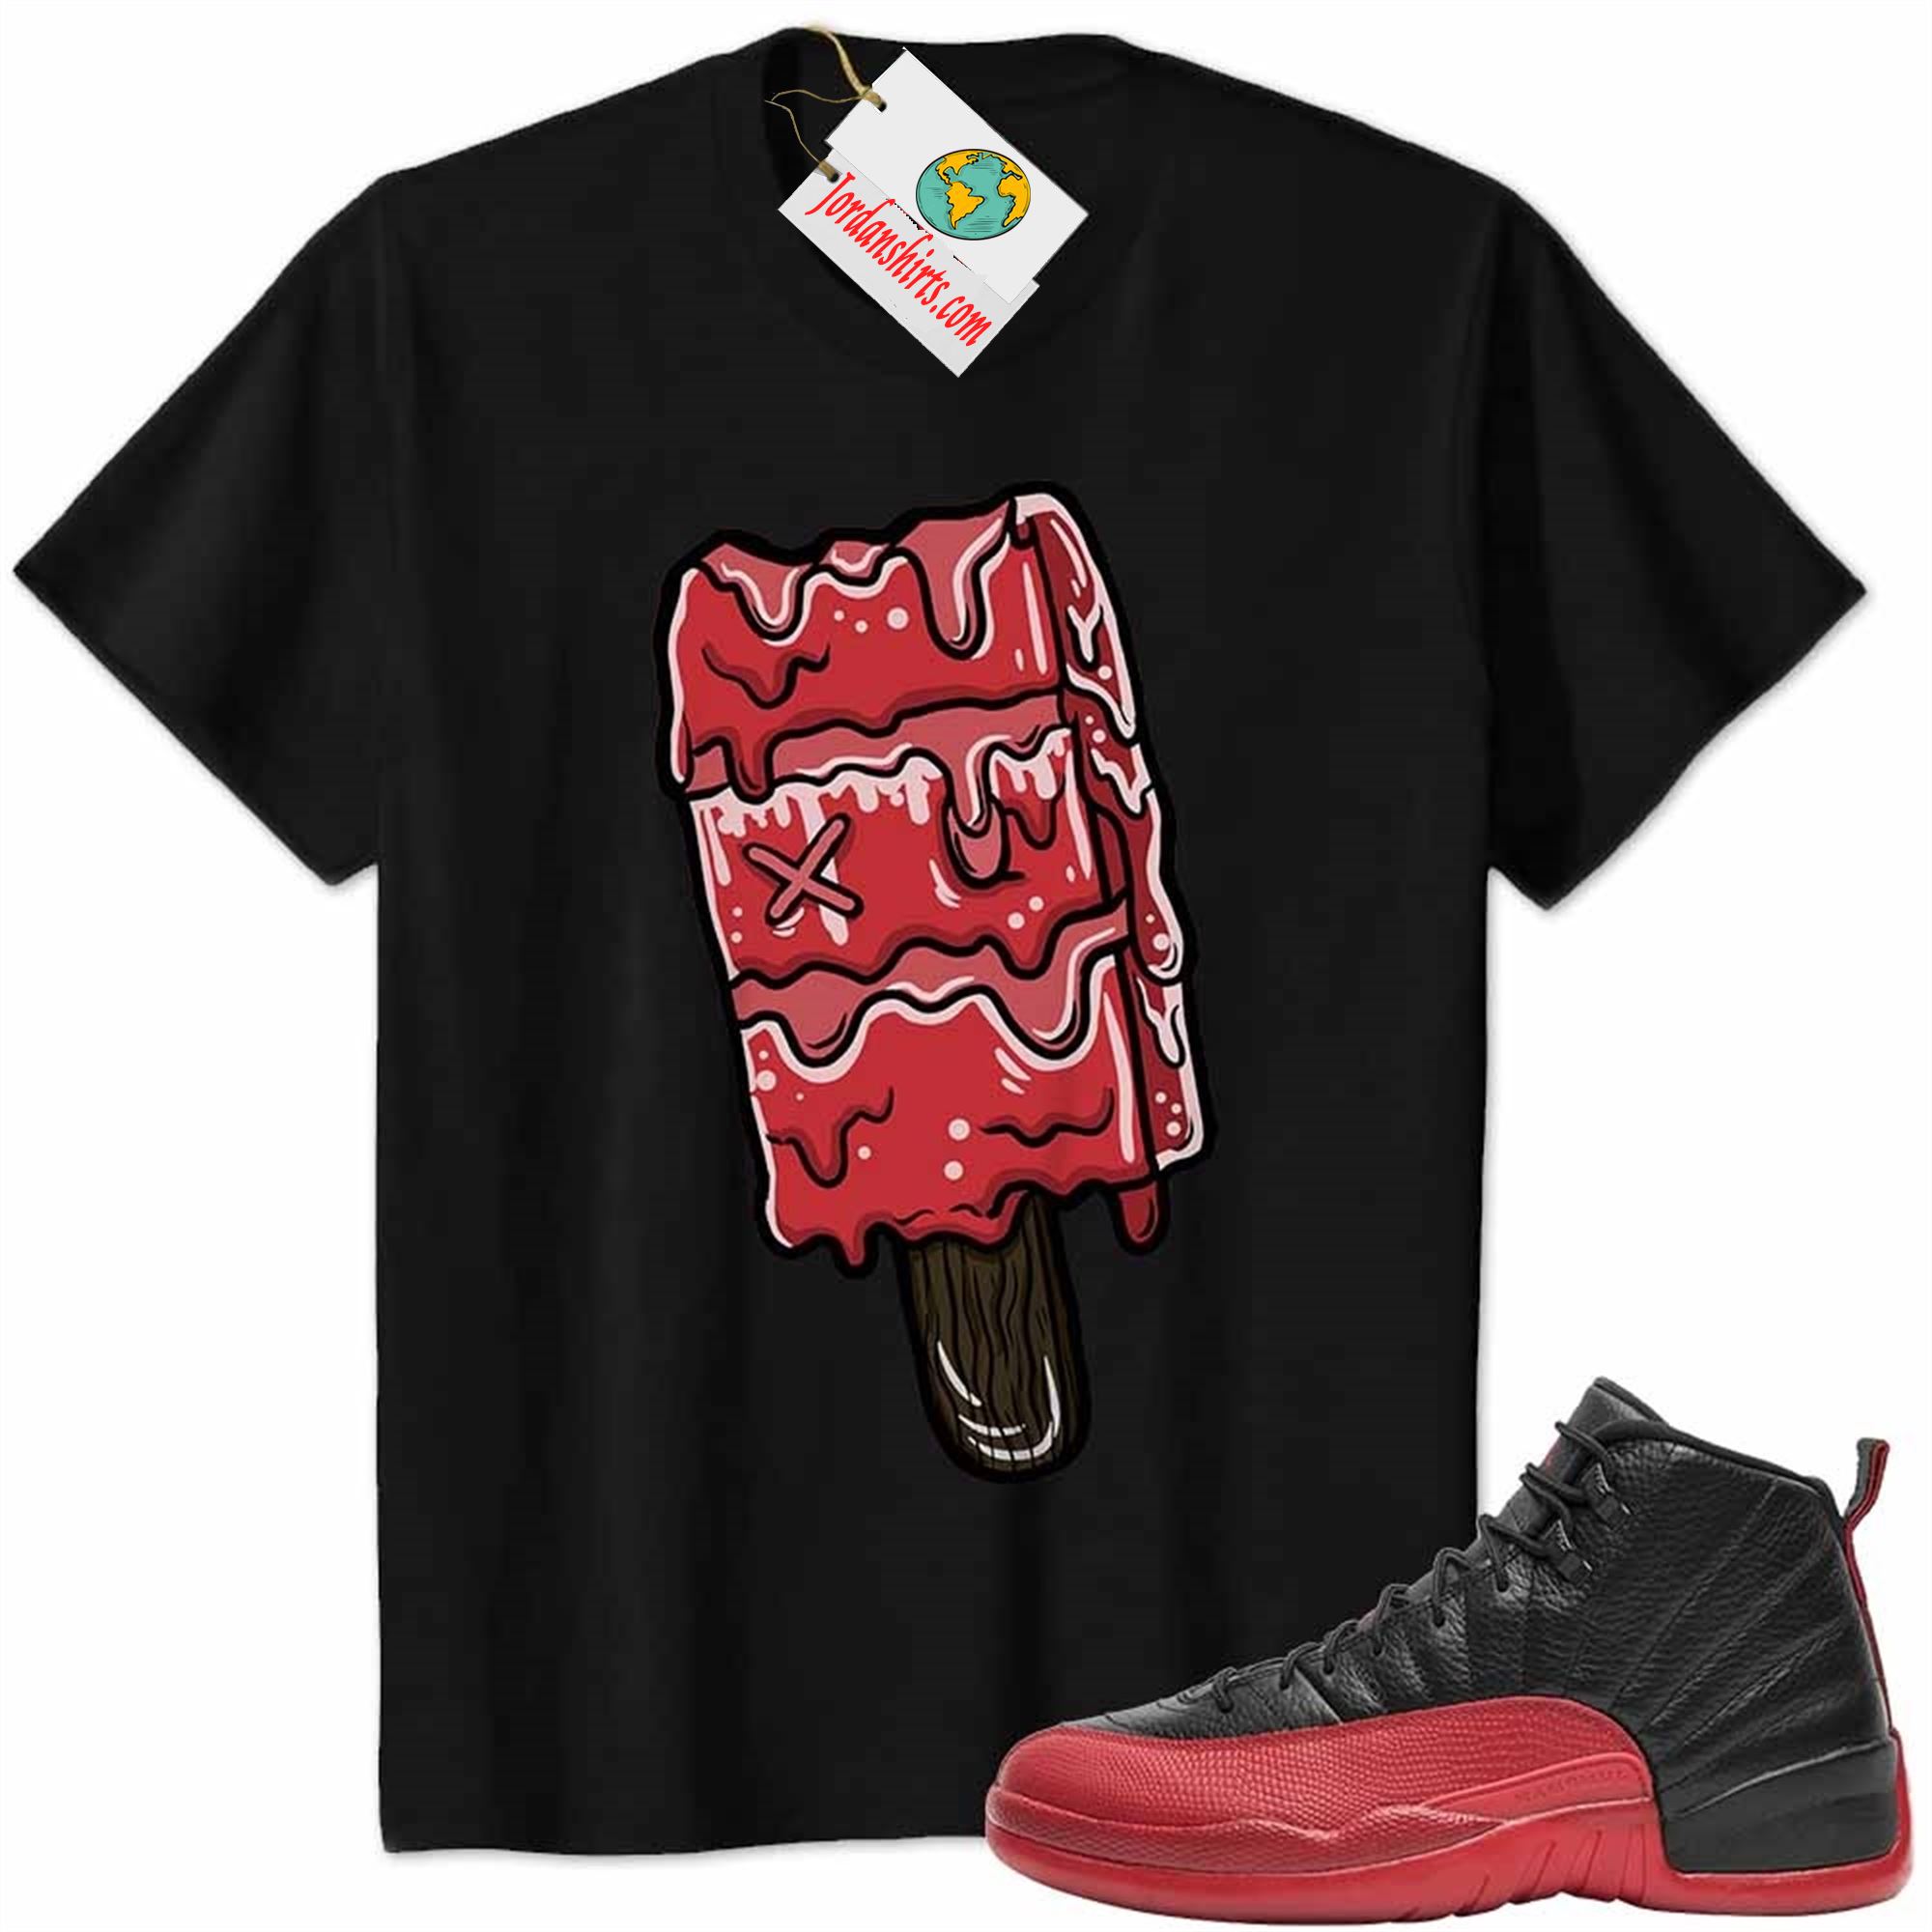 Jordan 12 Shirt, Ice Cream Dripping Black Air Jordan 12 Flu Game 12s Size Up To 5xl